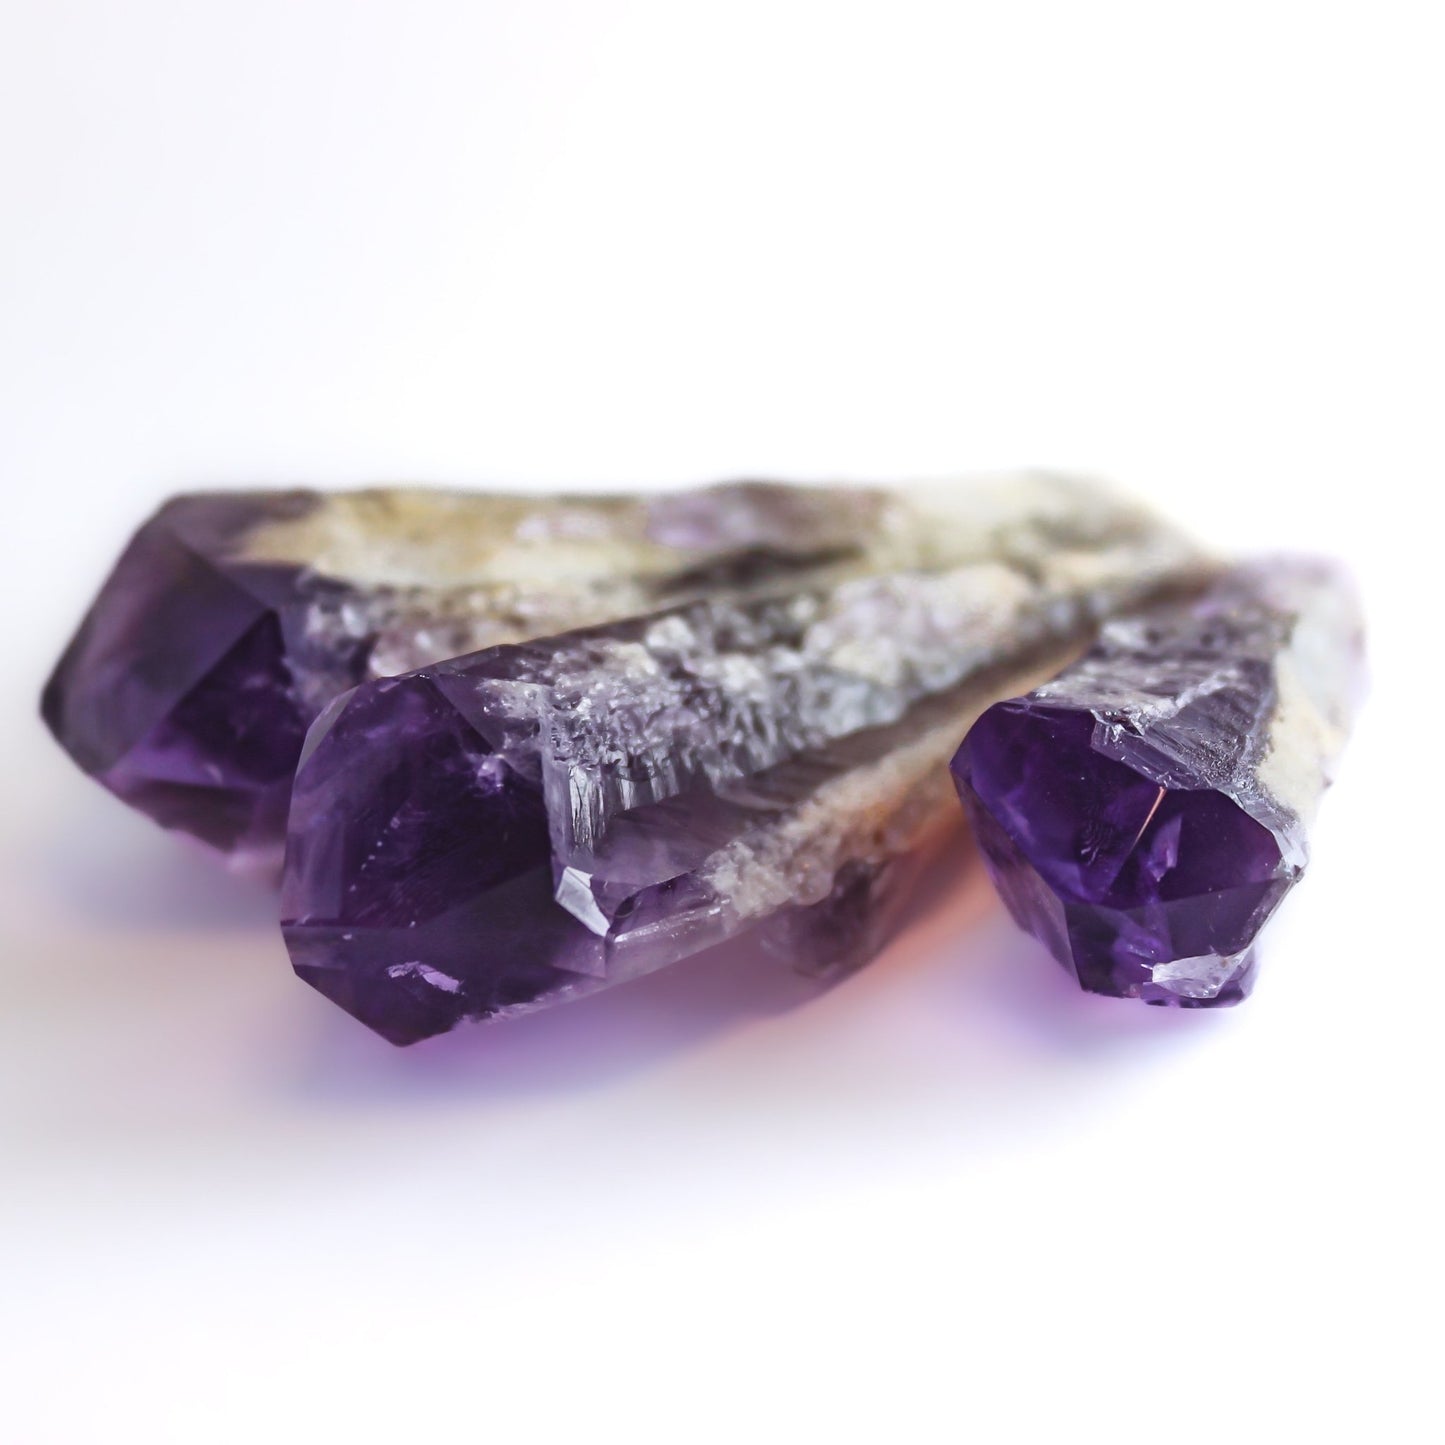 Bahia Amethyst - Conscious Crystals New Zealand Crystal and Spiritual Shop